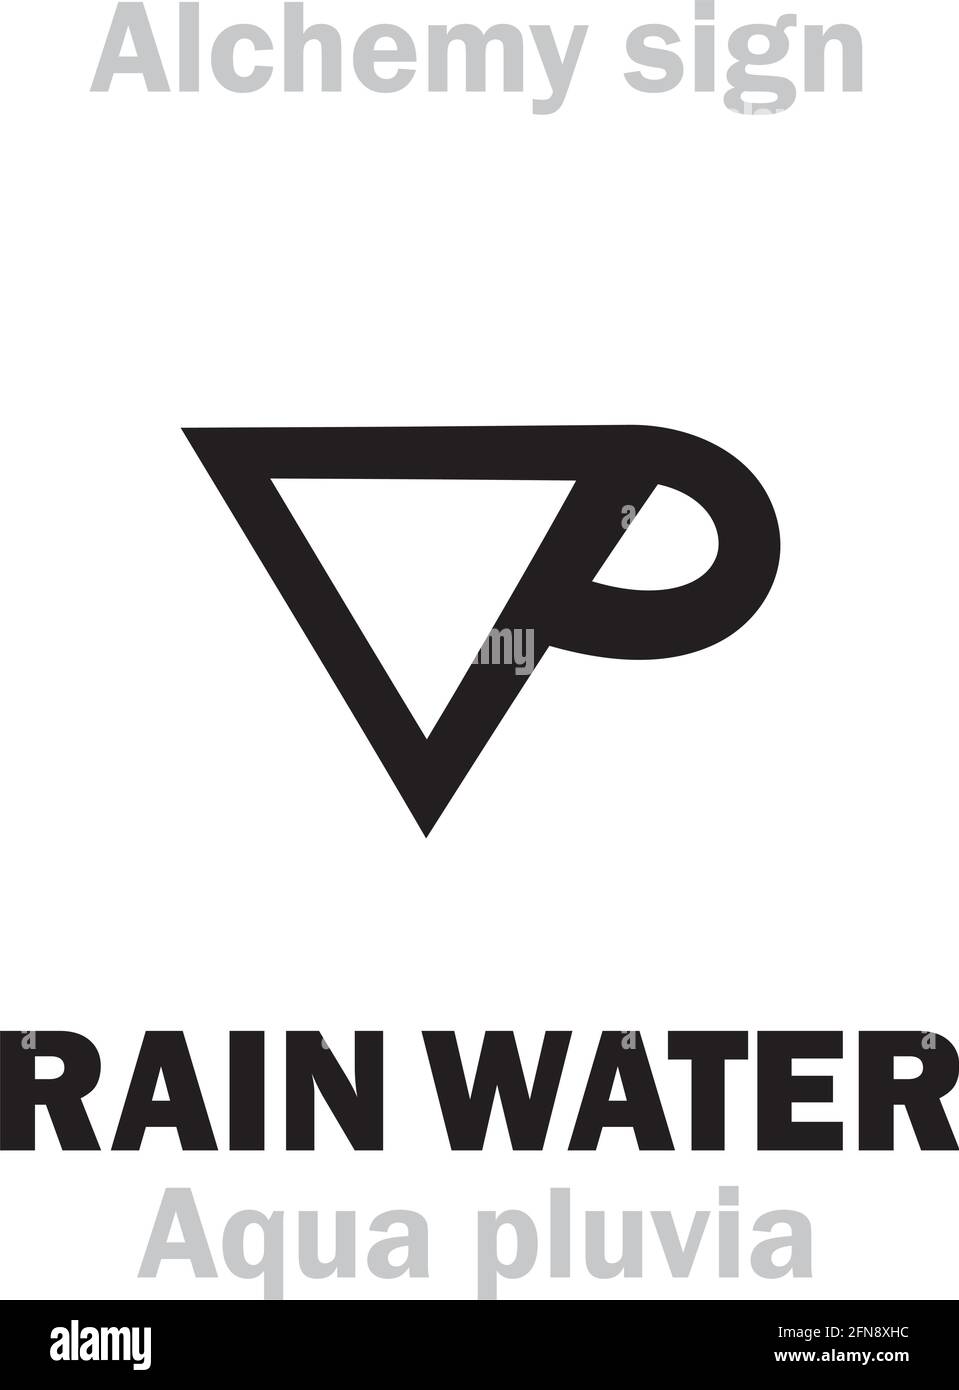 Alchemy Alphabet: RAIN WATER (Aqua pluvia), Rainwater, also syn.eq.: Distilled Water (Aqua distillata, Aqua purificata). Common solvent. Stock Vector